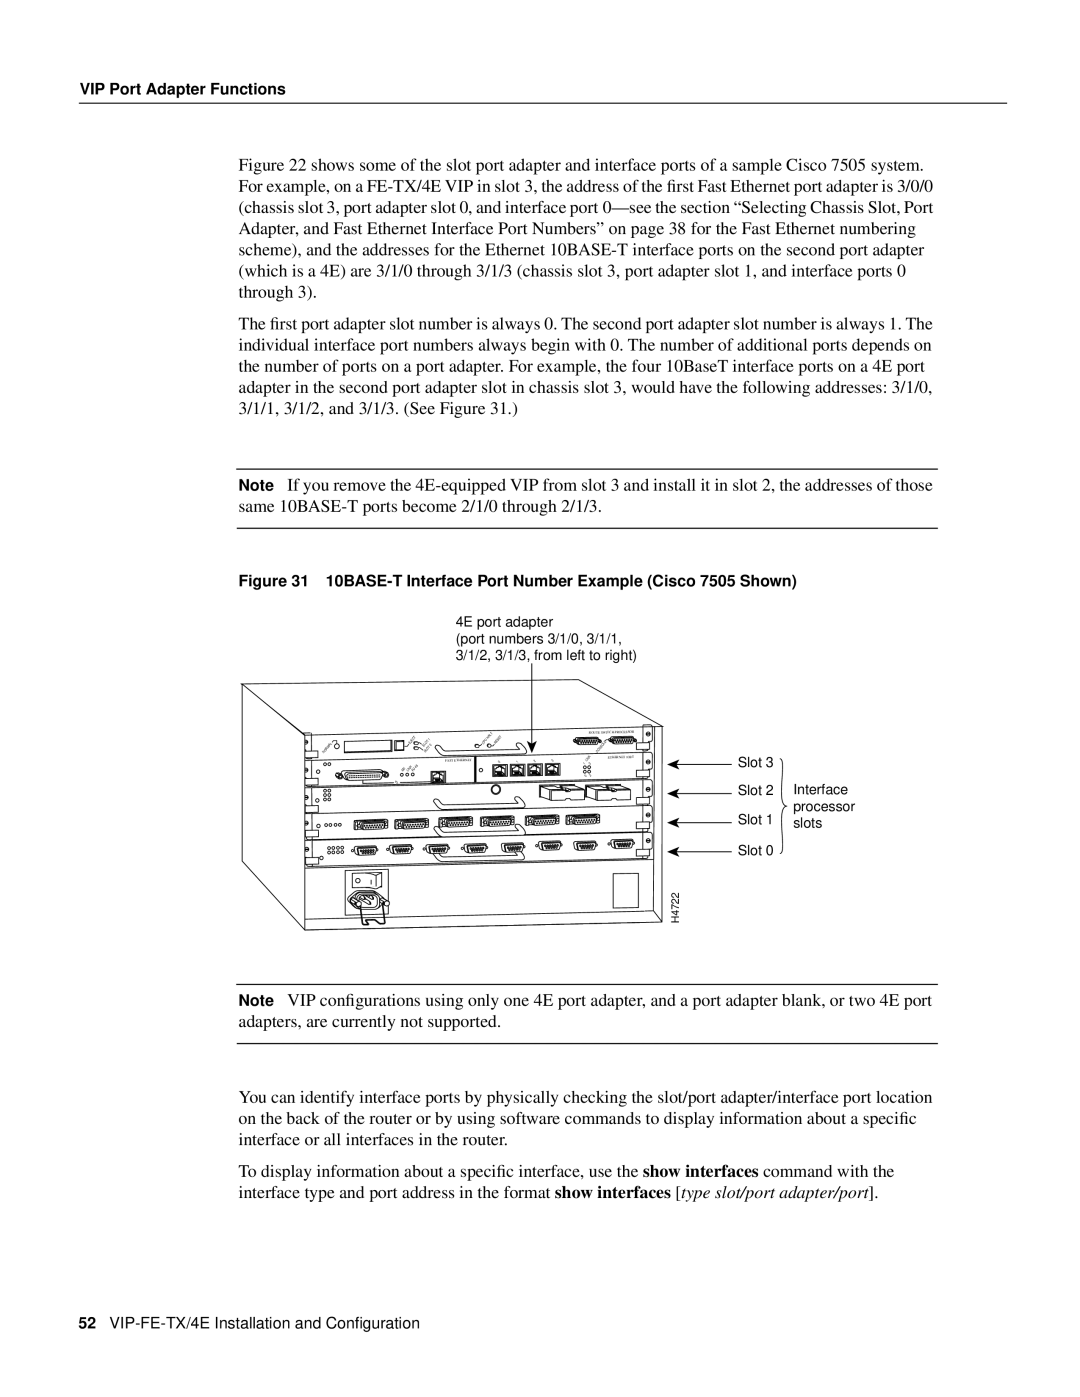 Cisco Systems manual VIP-FE-TX/4E Installation and Conﬁguration, H4722 